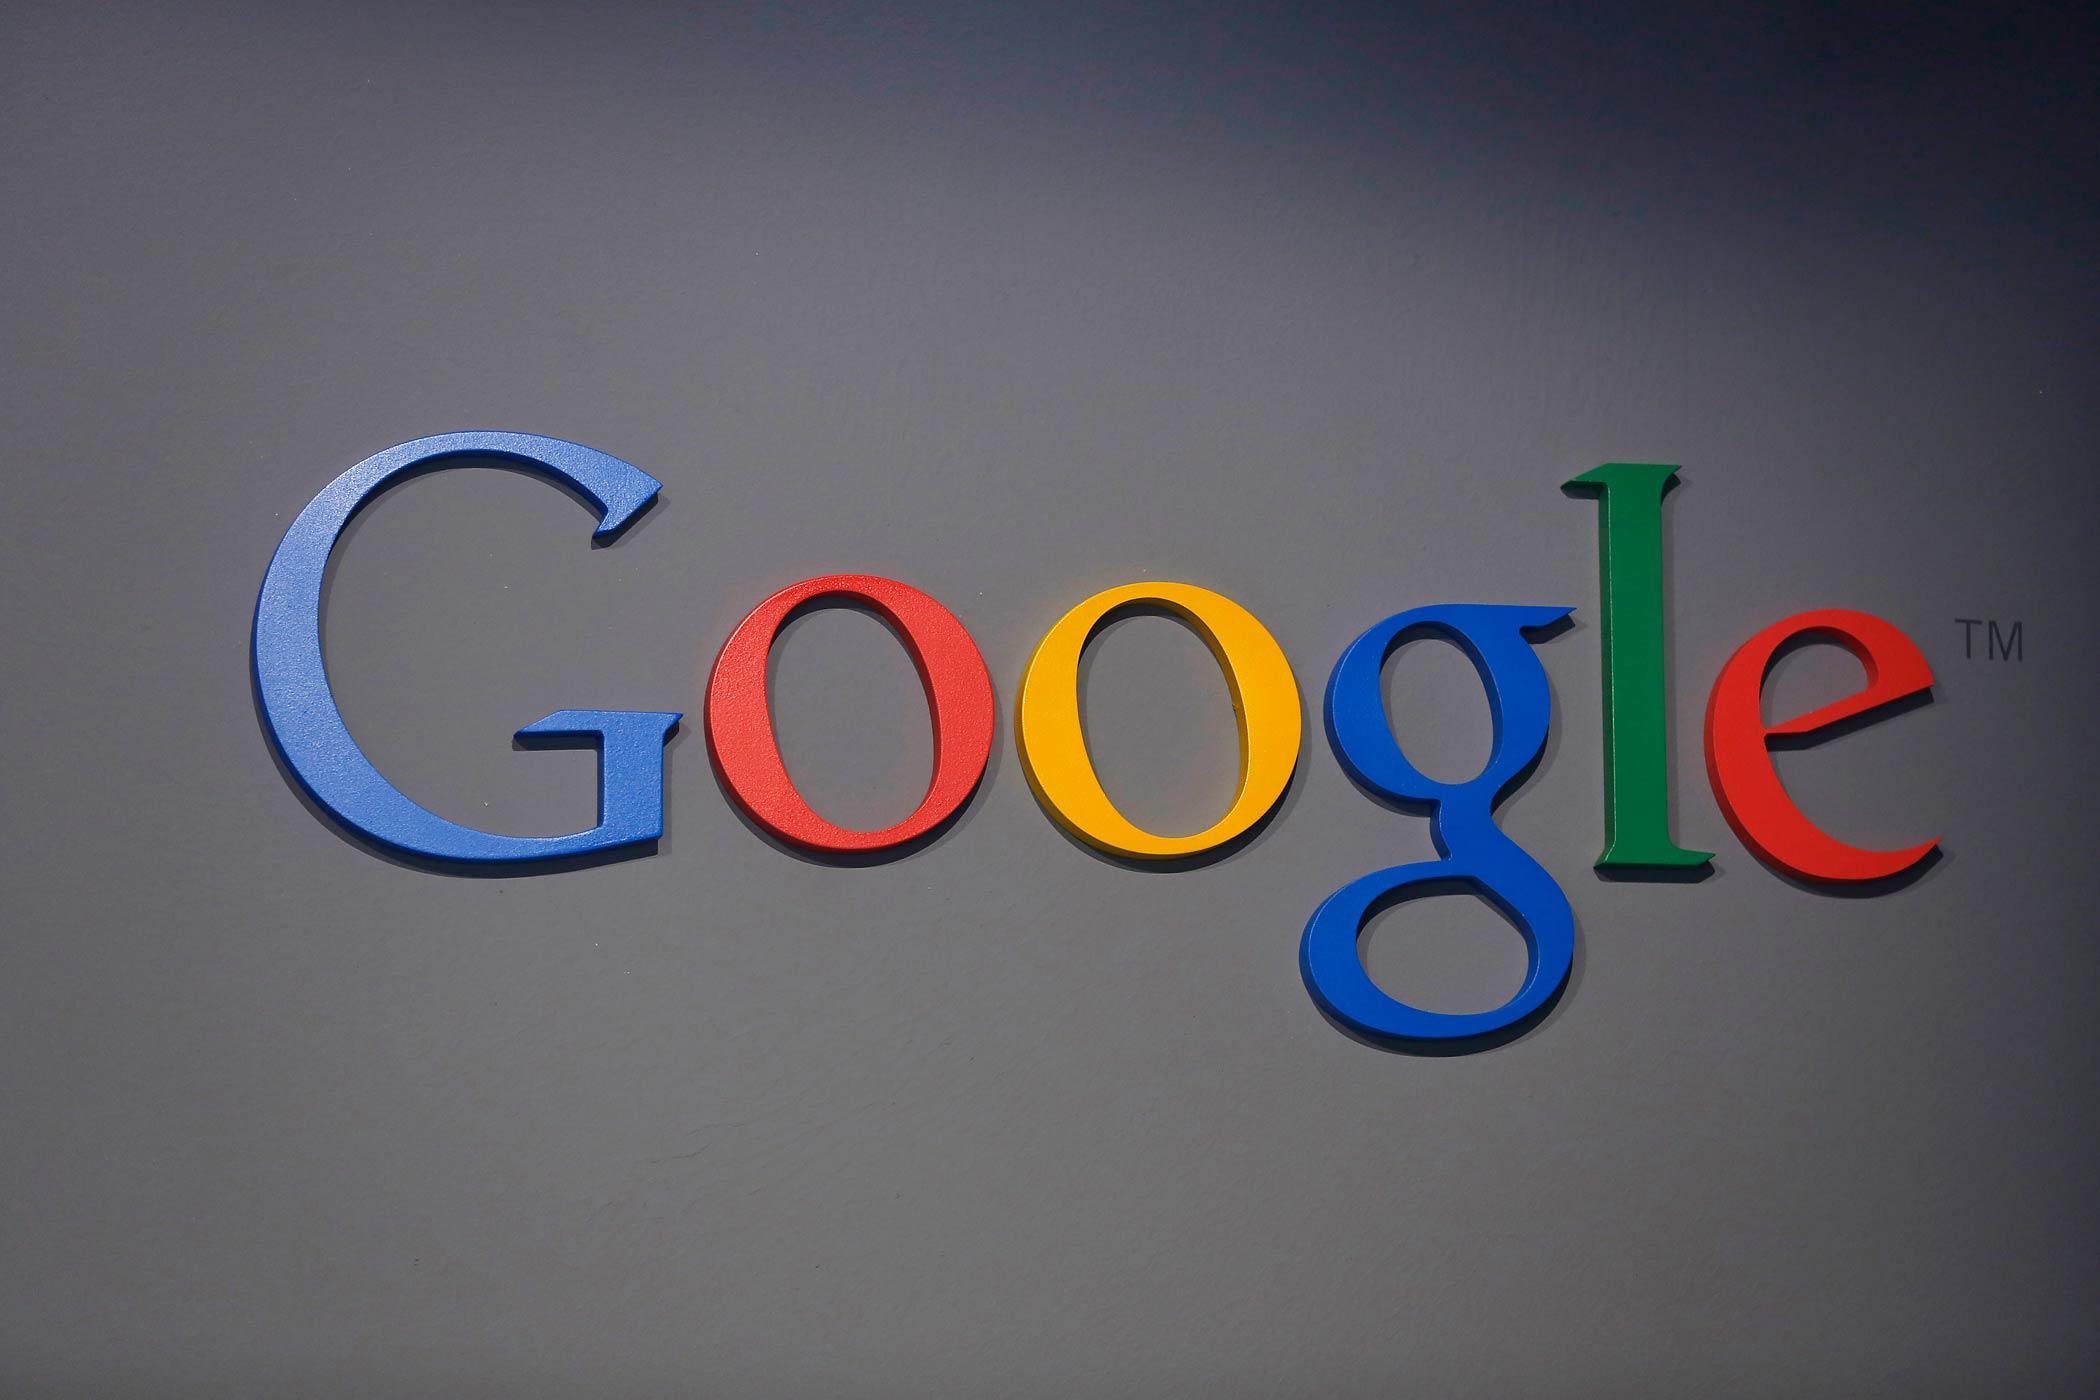 Gray TV Company Logo - Google Kills off Google TV to Focus on Android TV, Chromecast